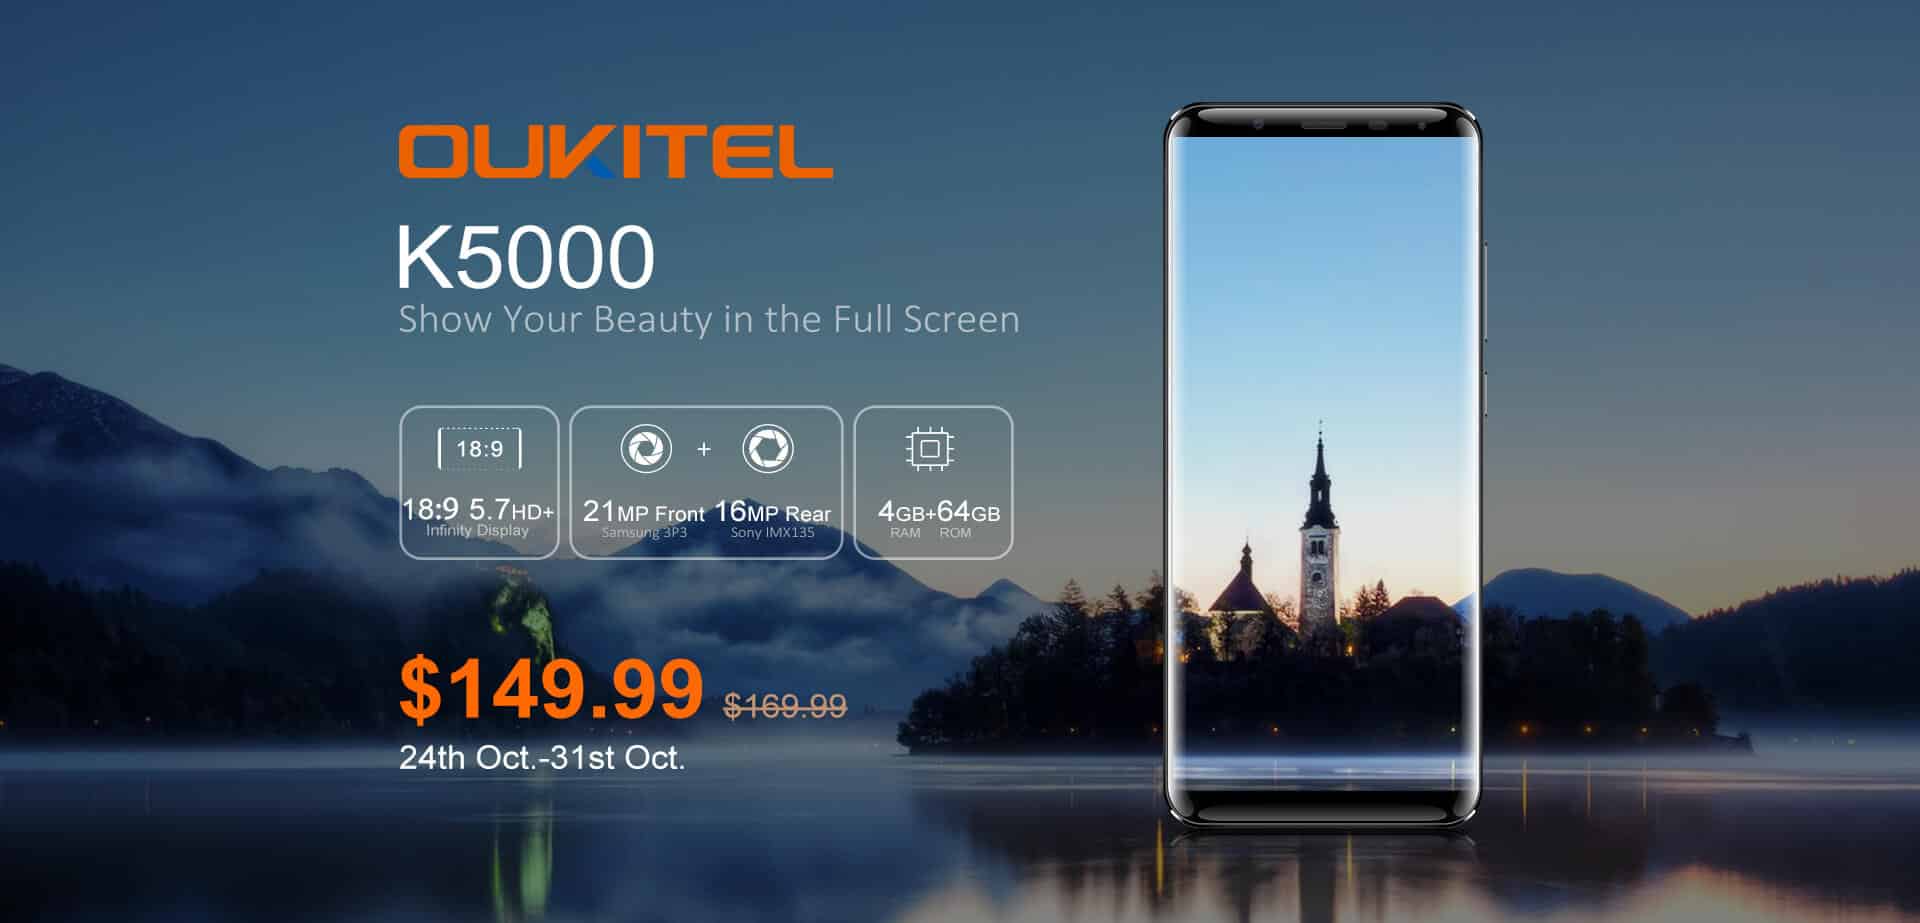 Article photo: Oukitel K5000 – 5000mAh battery & 18:9 display